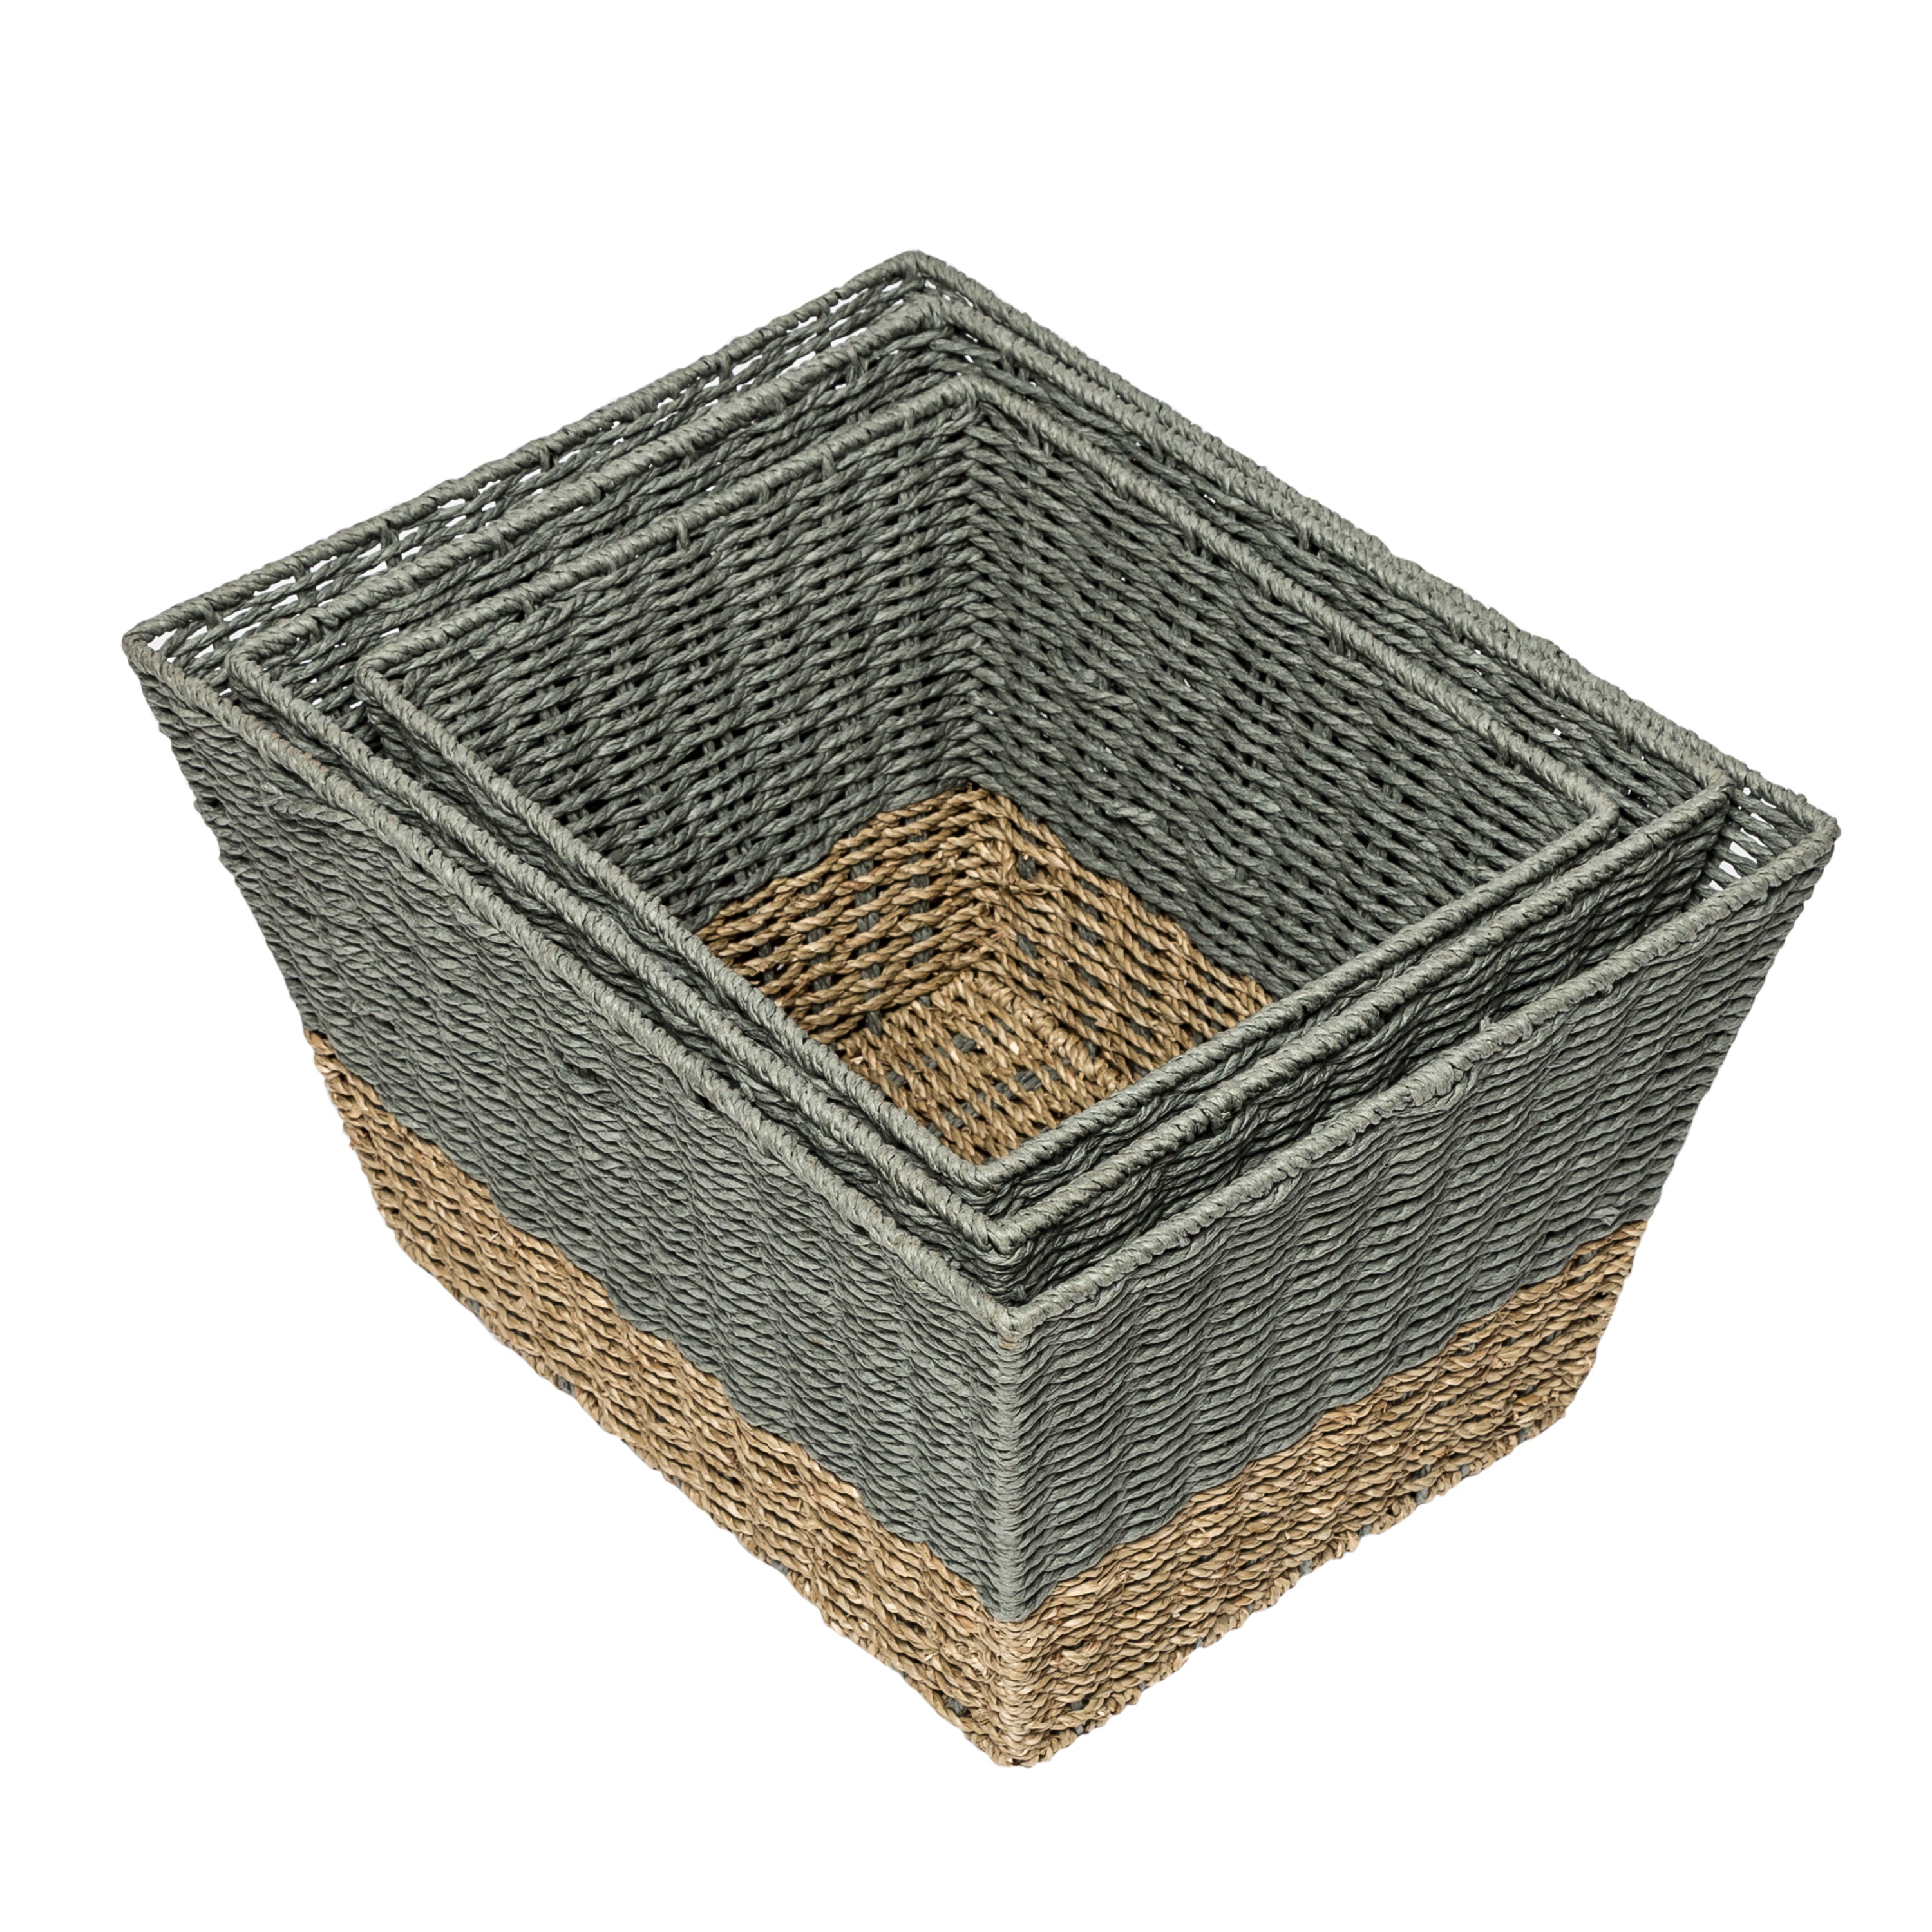 3 Section Bathroom Basket Wicker Baskets for Shelves Seagrass